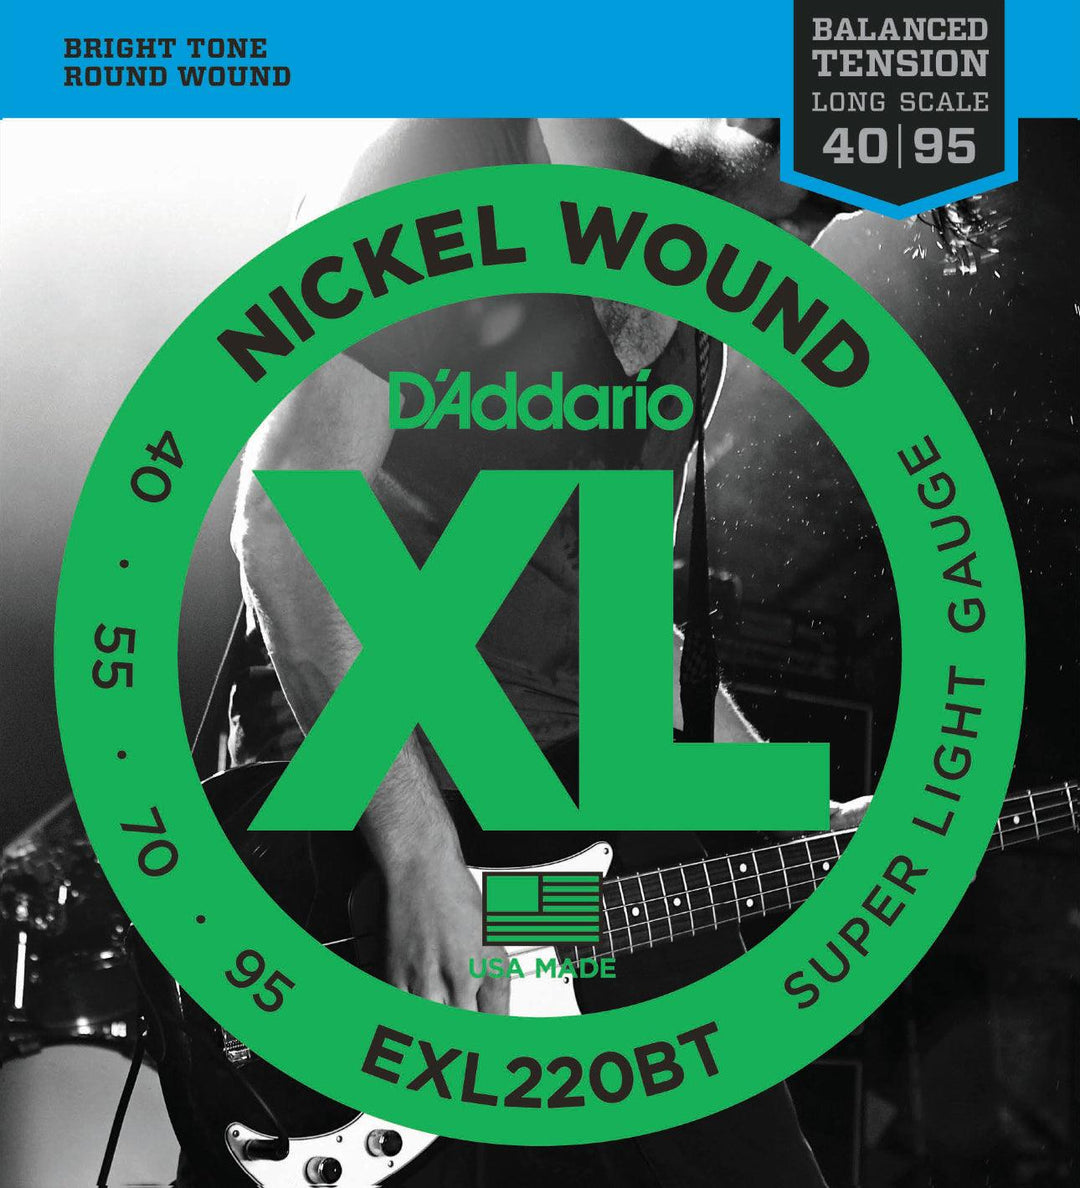 D'Addario XL Bass Guitar String Set, Nickel, EXL220BT Balanced Tension Super Light .040-.095 - A Strings